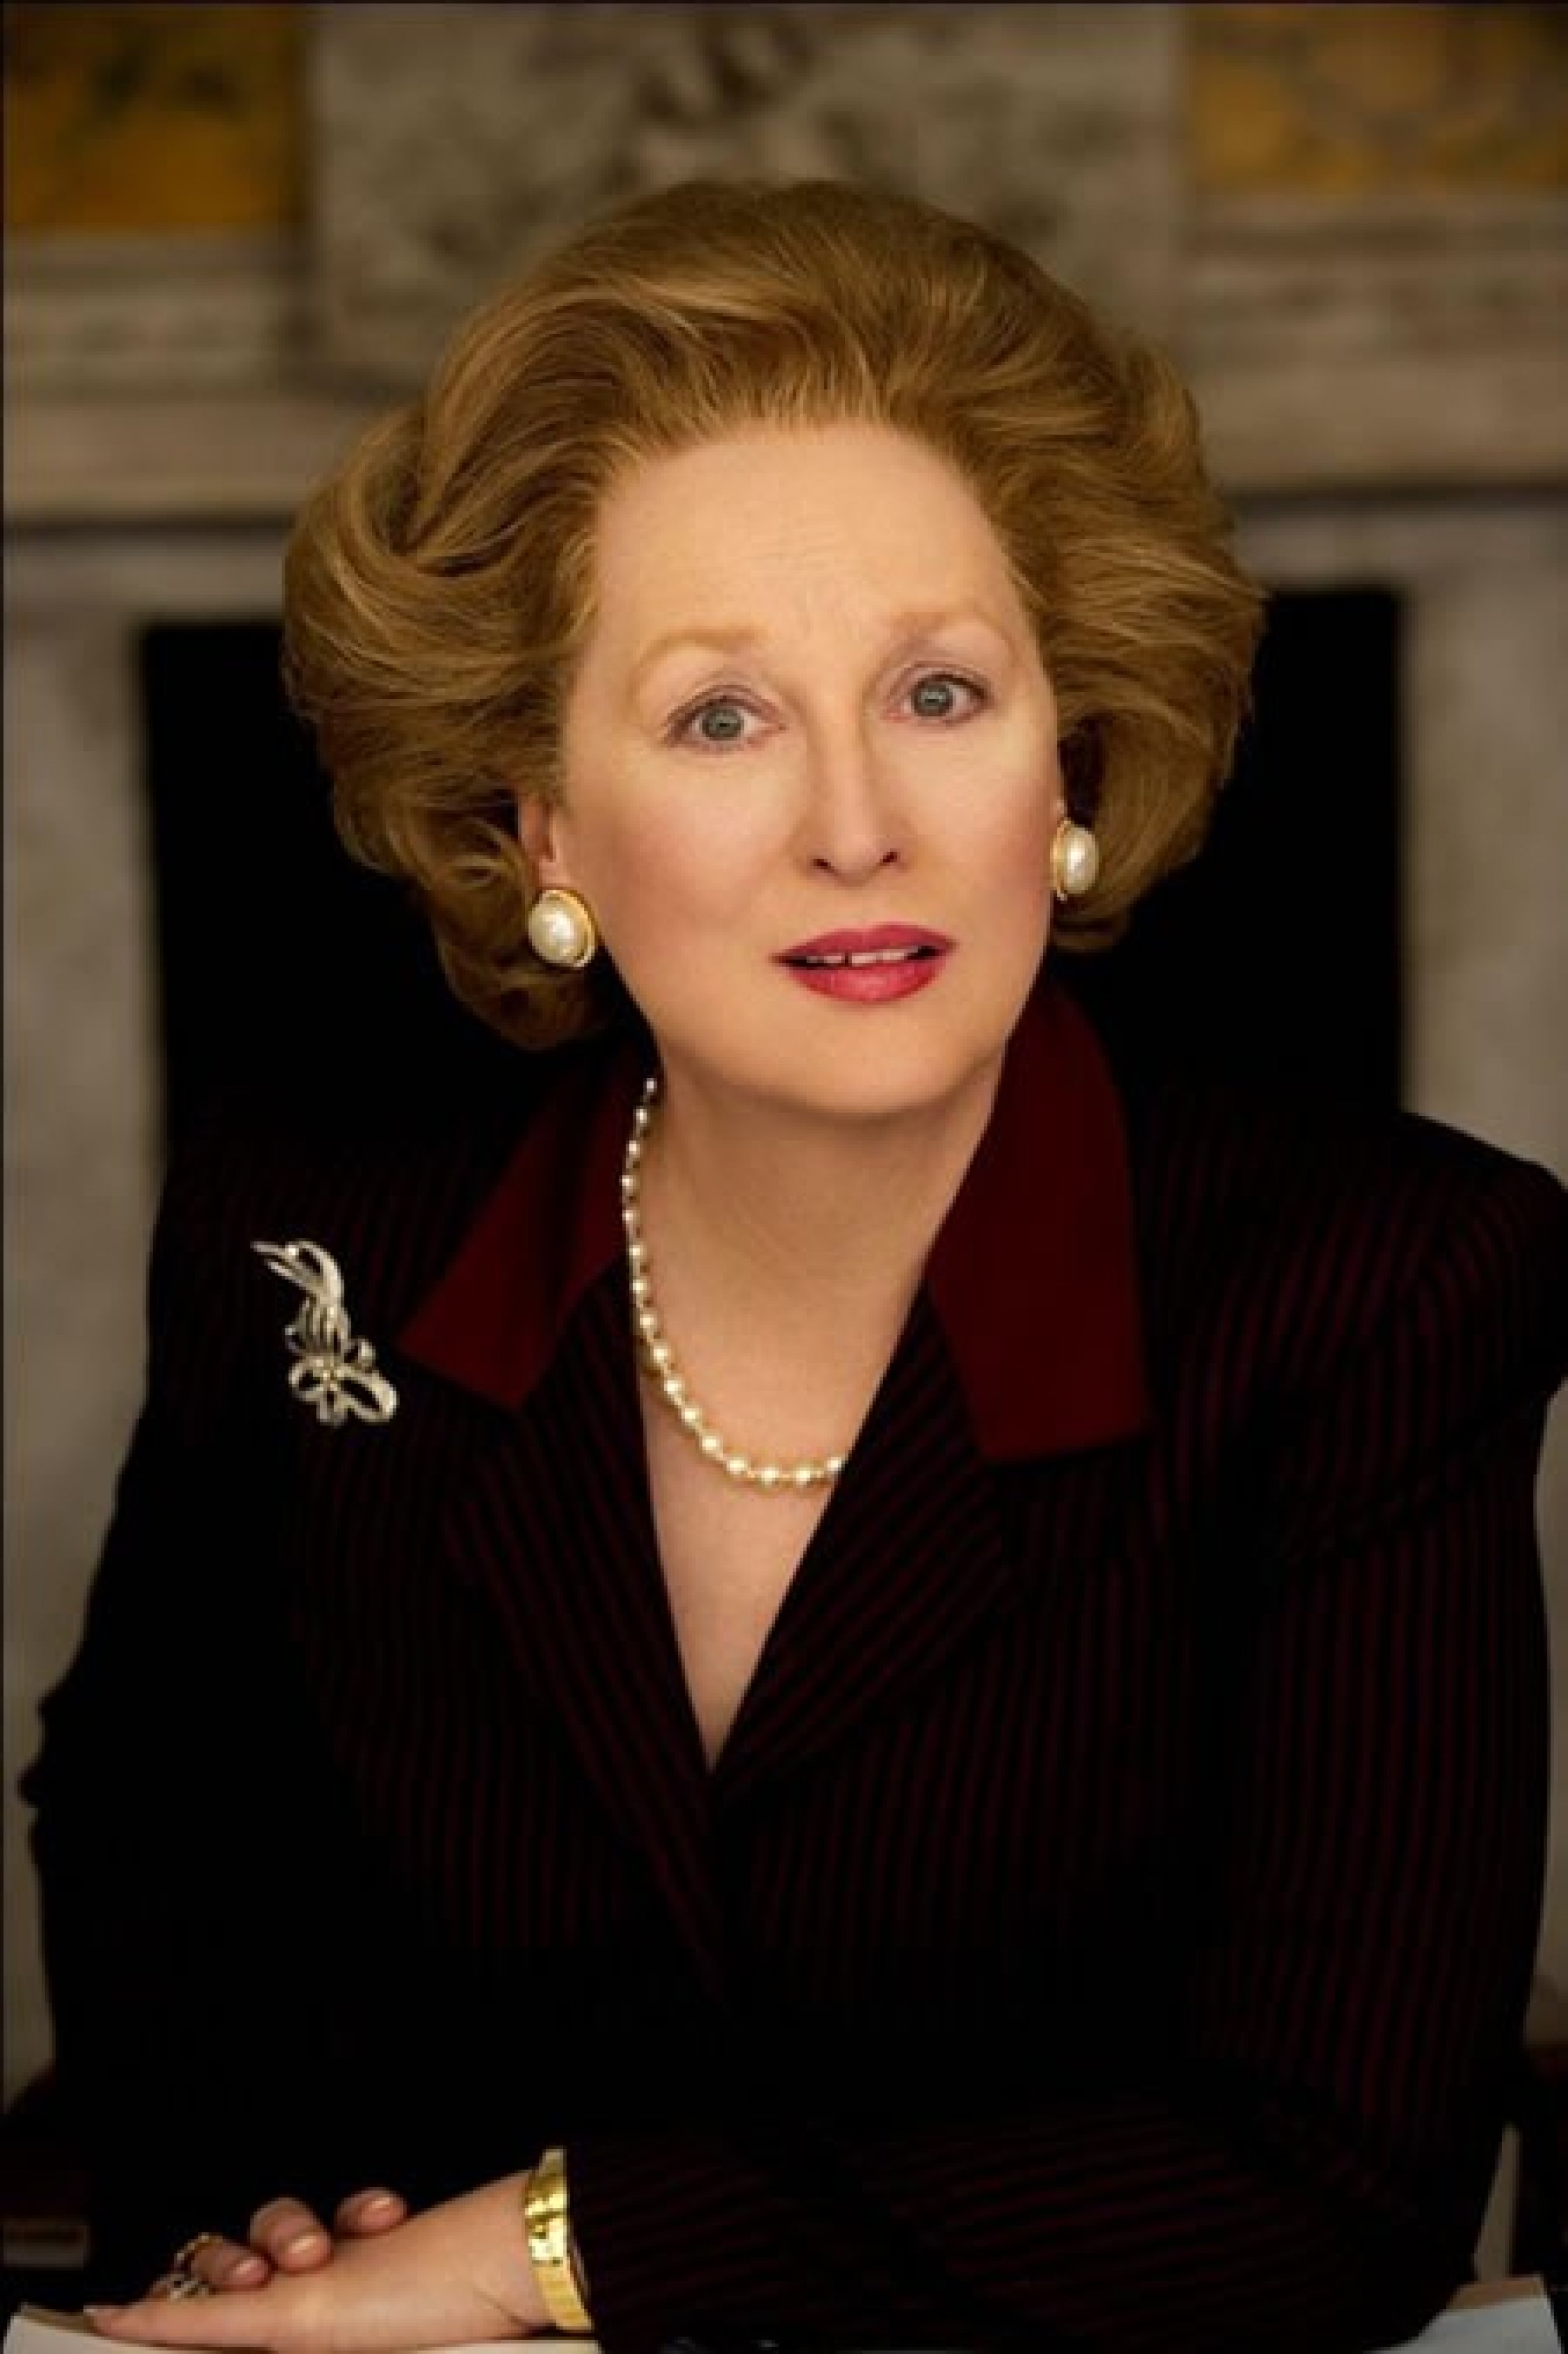 Meryl Streep in The Iron Lady 2012 Winner